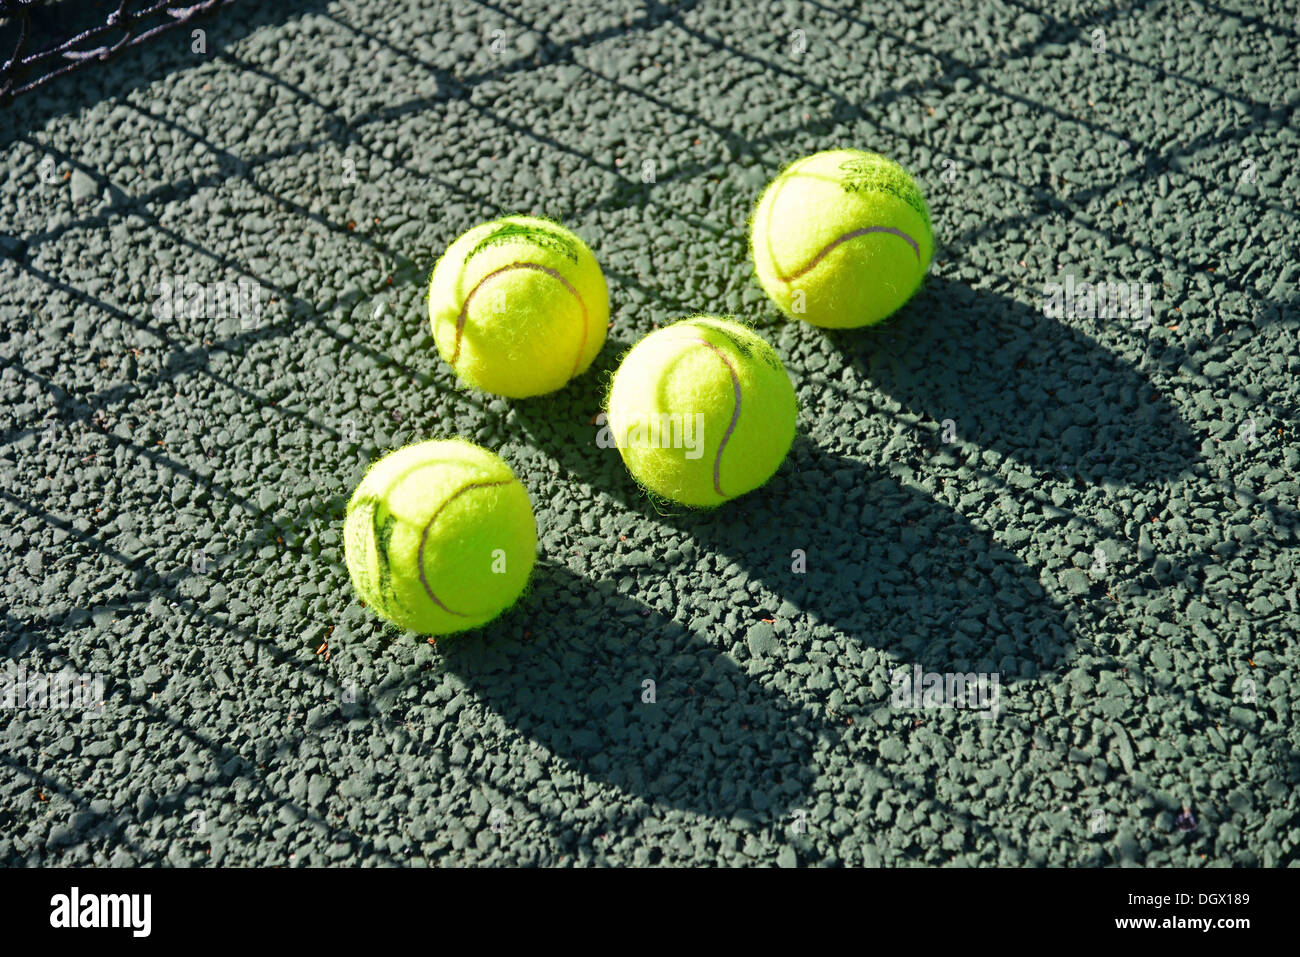 Tennis balls on court, Royal Ascot Tennis Club, Ascot, Berkshire, England, United Kingdom Stock Photo